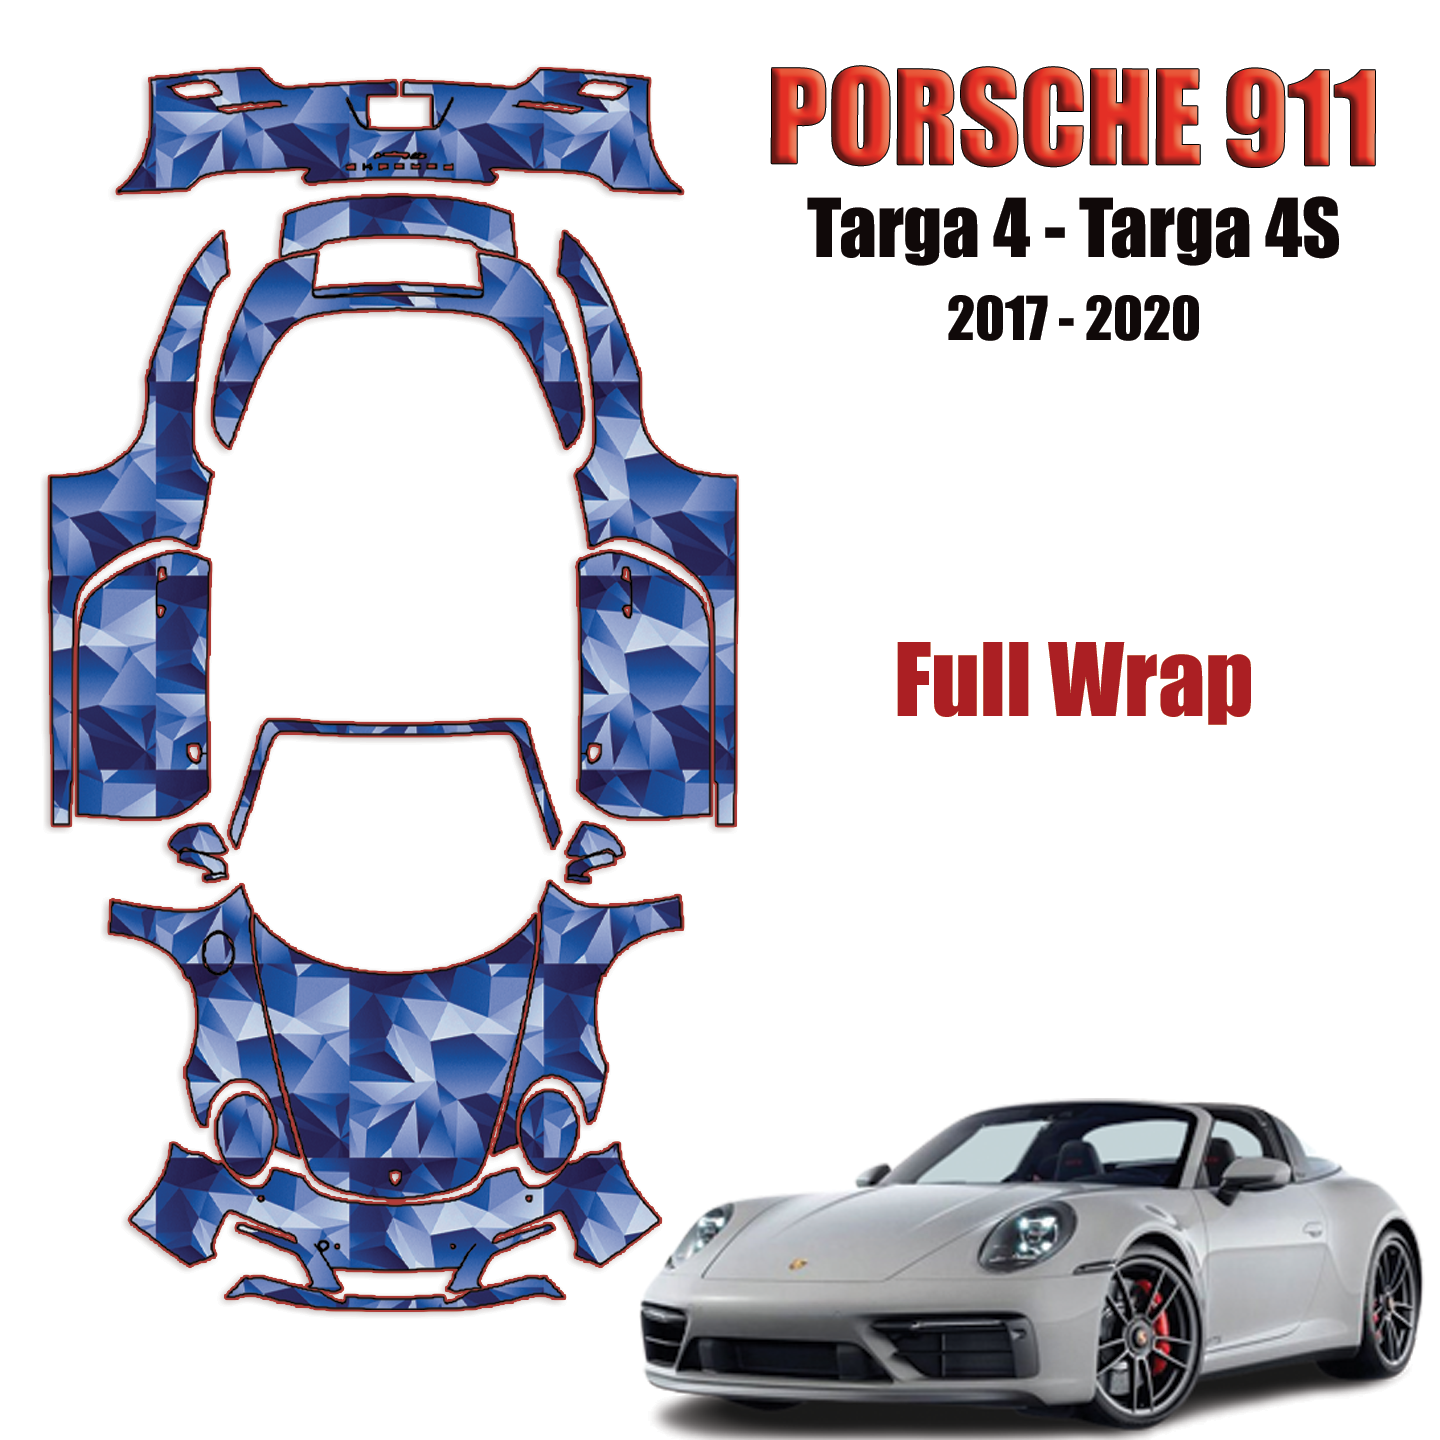 2017-2020 Porsche 911 – Tagra 4, Tagra 4S, Cabriolet Paint Protection Kit – Full Wrap Vehicle